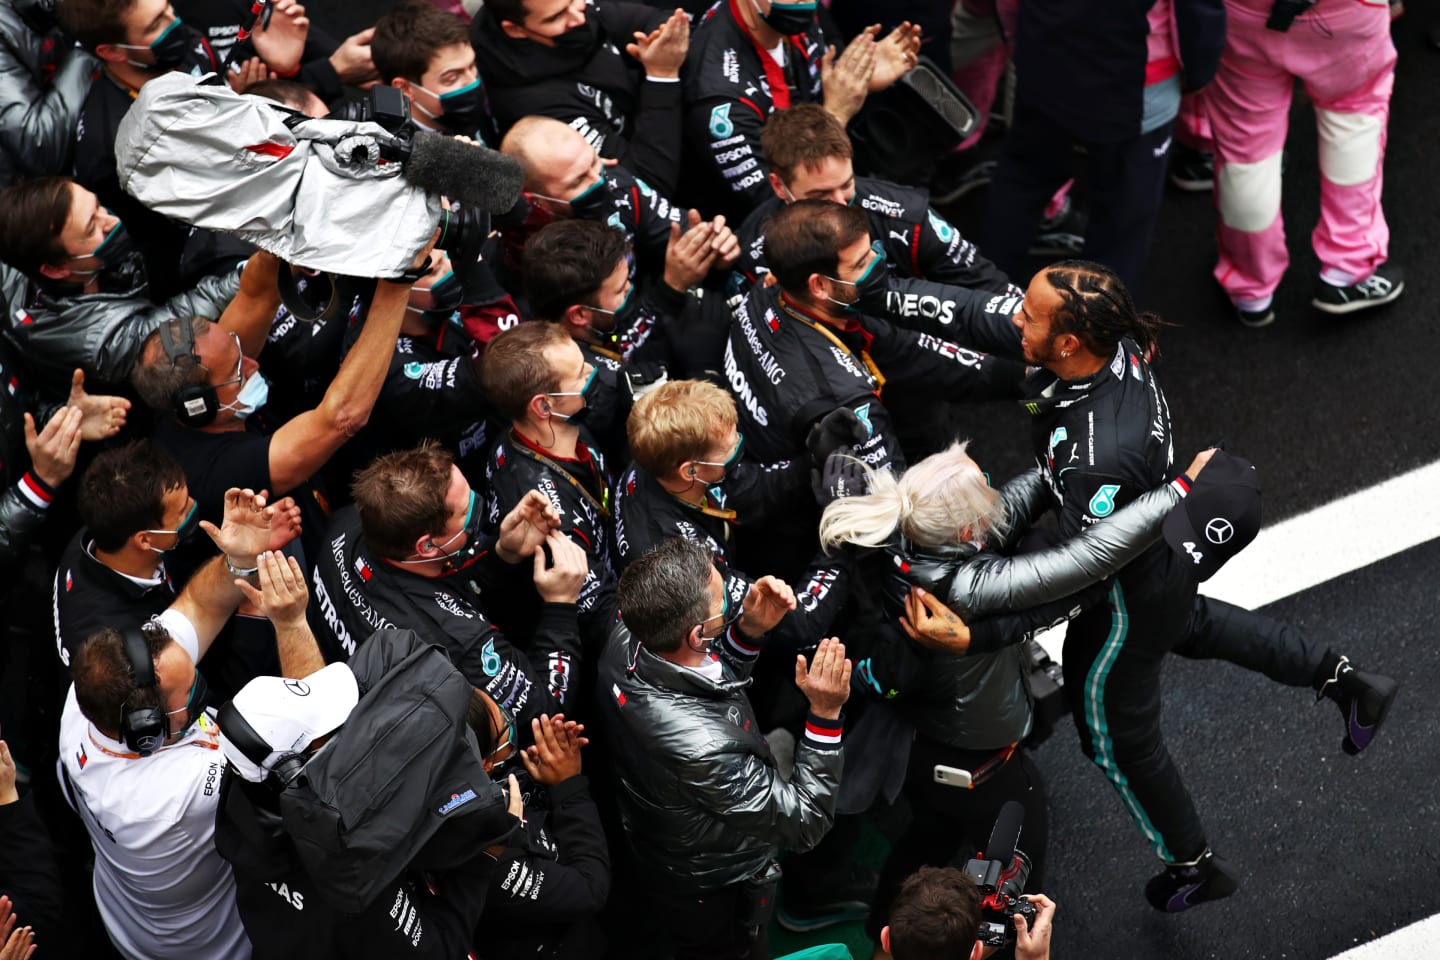 ISTANBUL, TURKEY - NOVEMBER 15: Race winner Lewis Hamilton of Great Britain and Mercedes GP